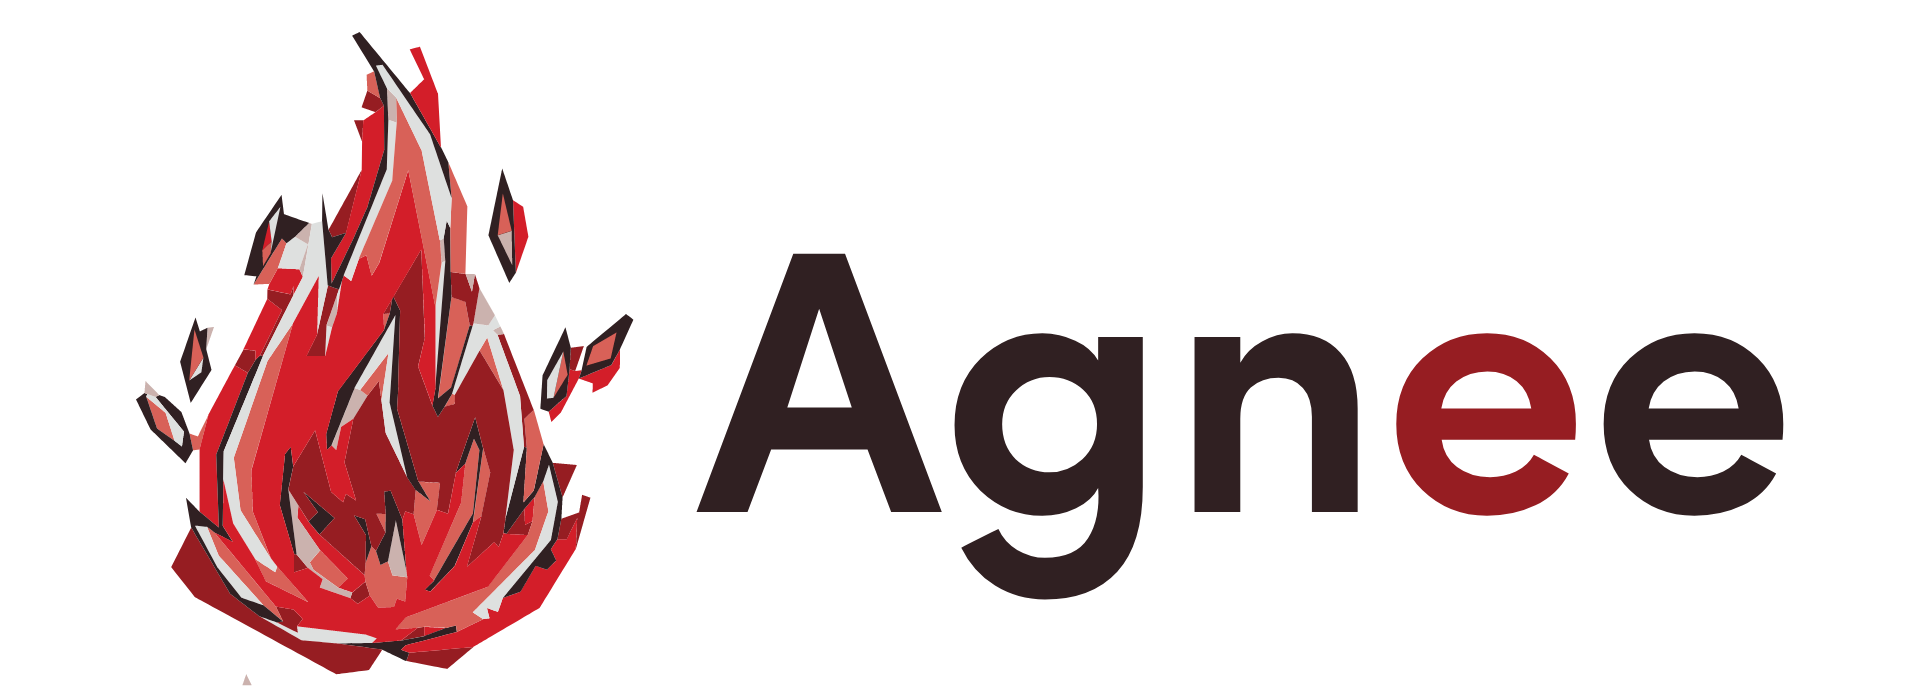 Agnee logo